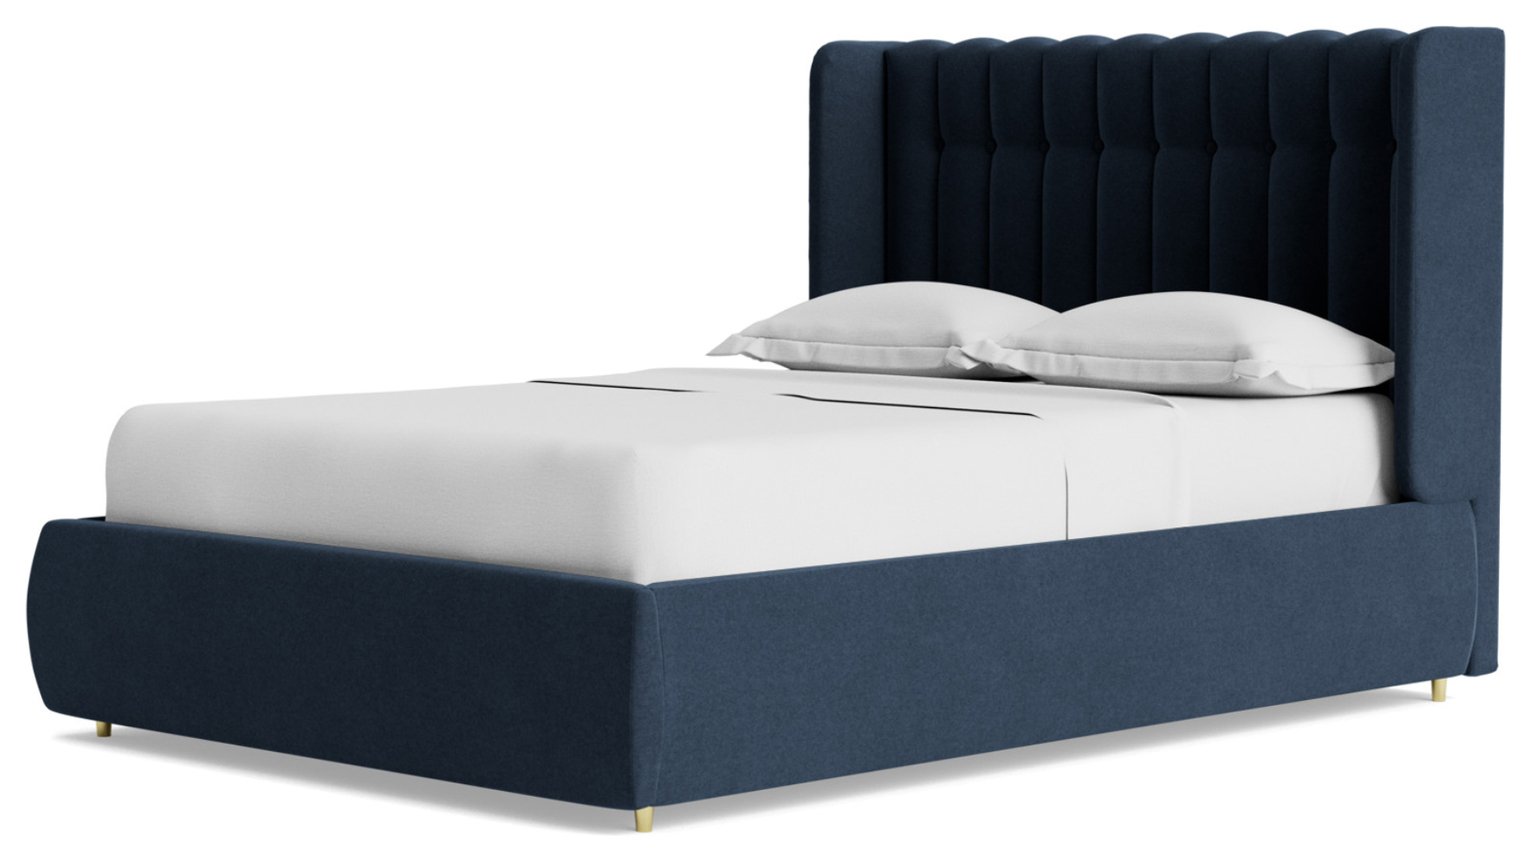 Swoon Kipling Fabric Double Ottoman Bedframe - Indigo Blue